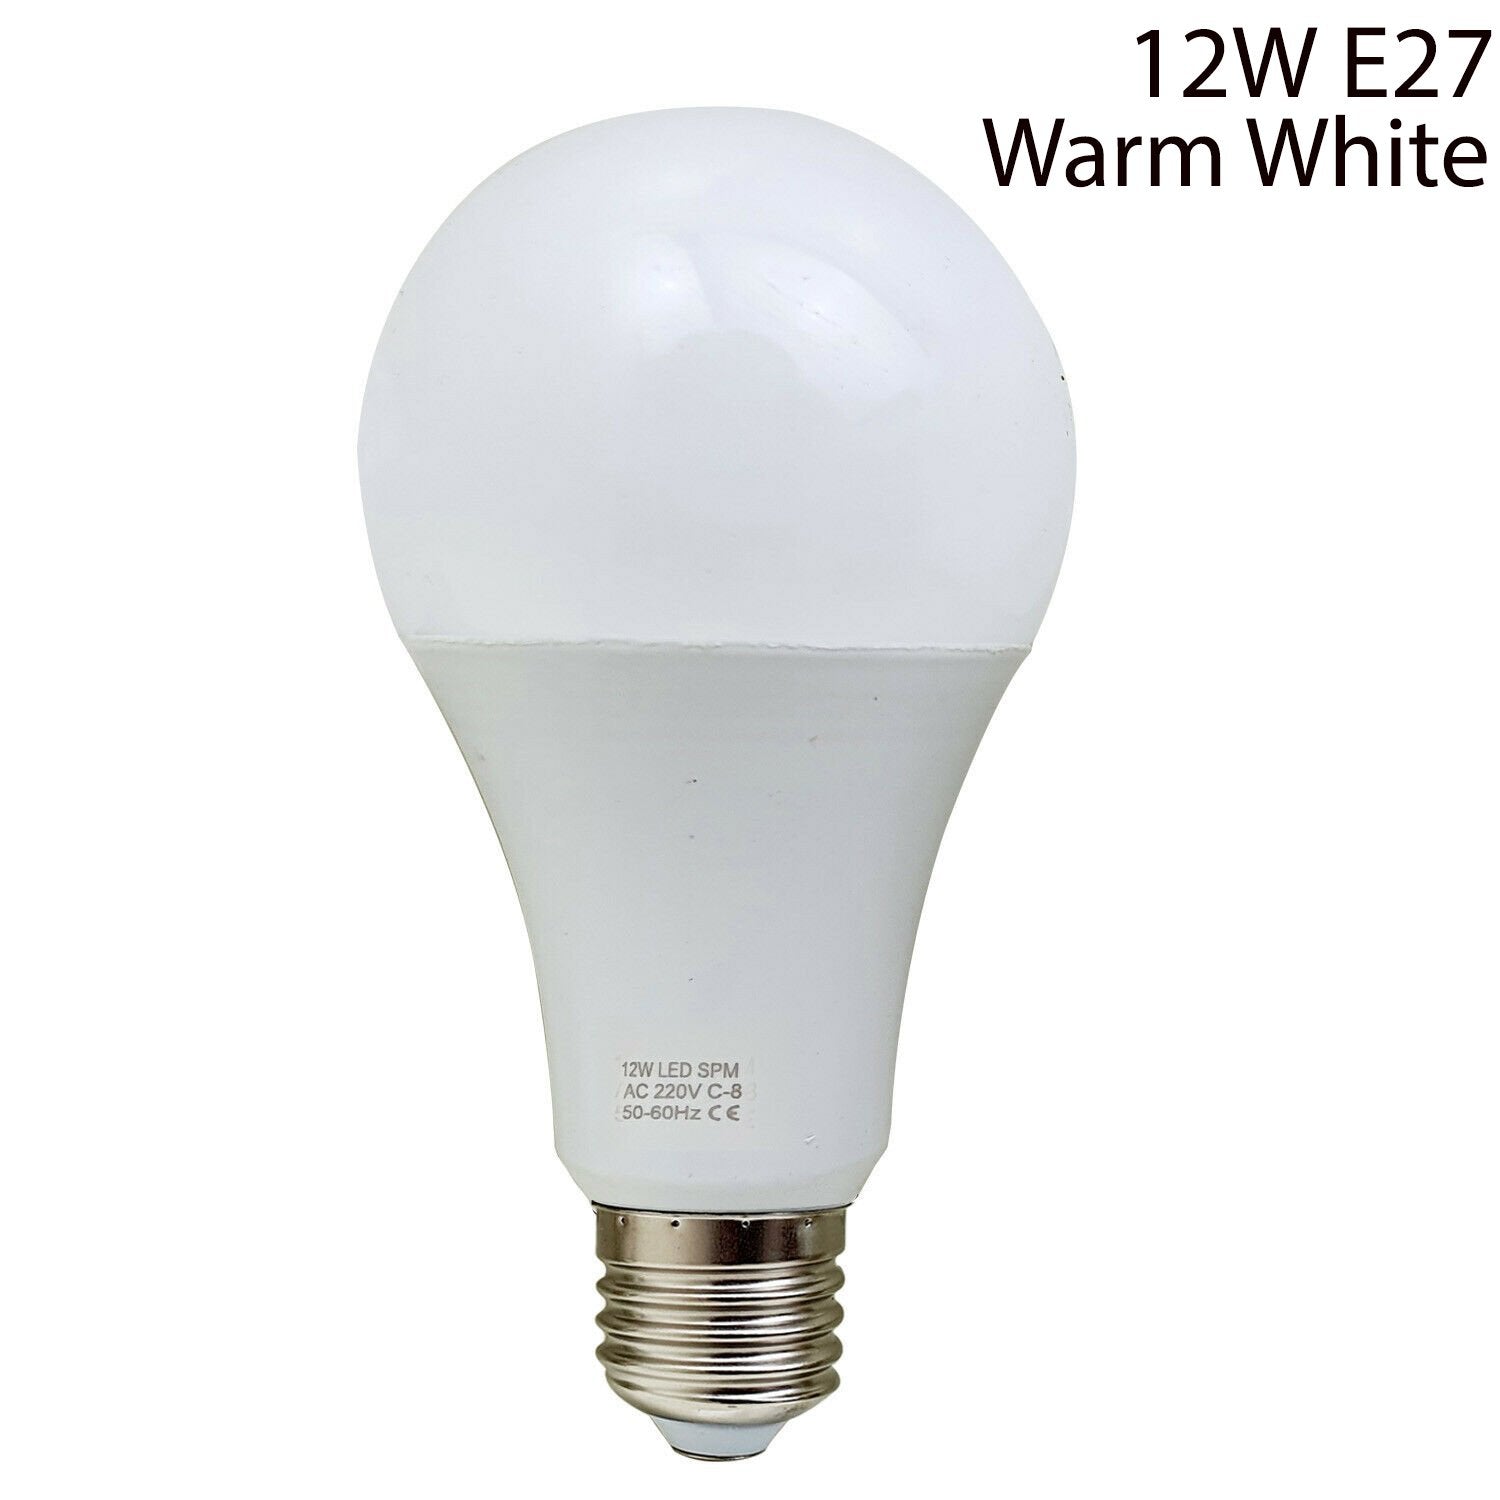 B22 Or E27 Light Bulb Energy Saving Lamp Warm White Globe~1365 - LEDSone UK Ltd